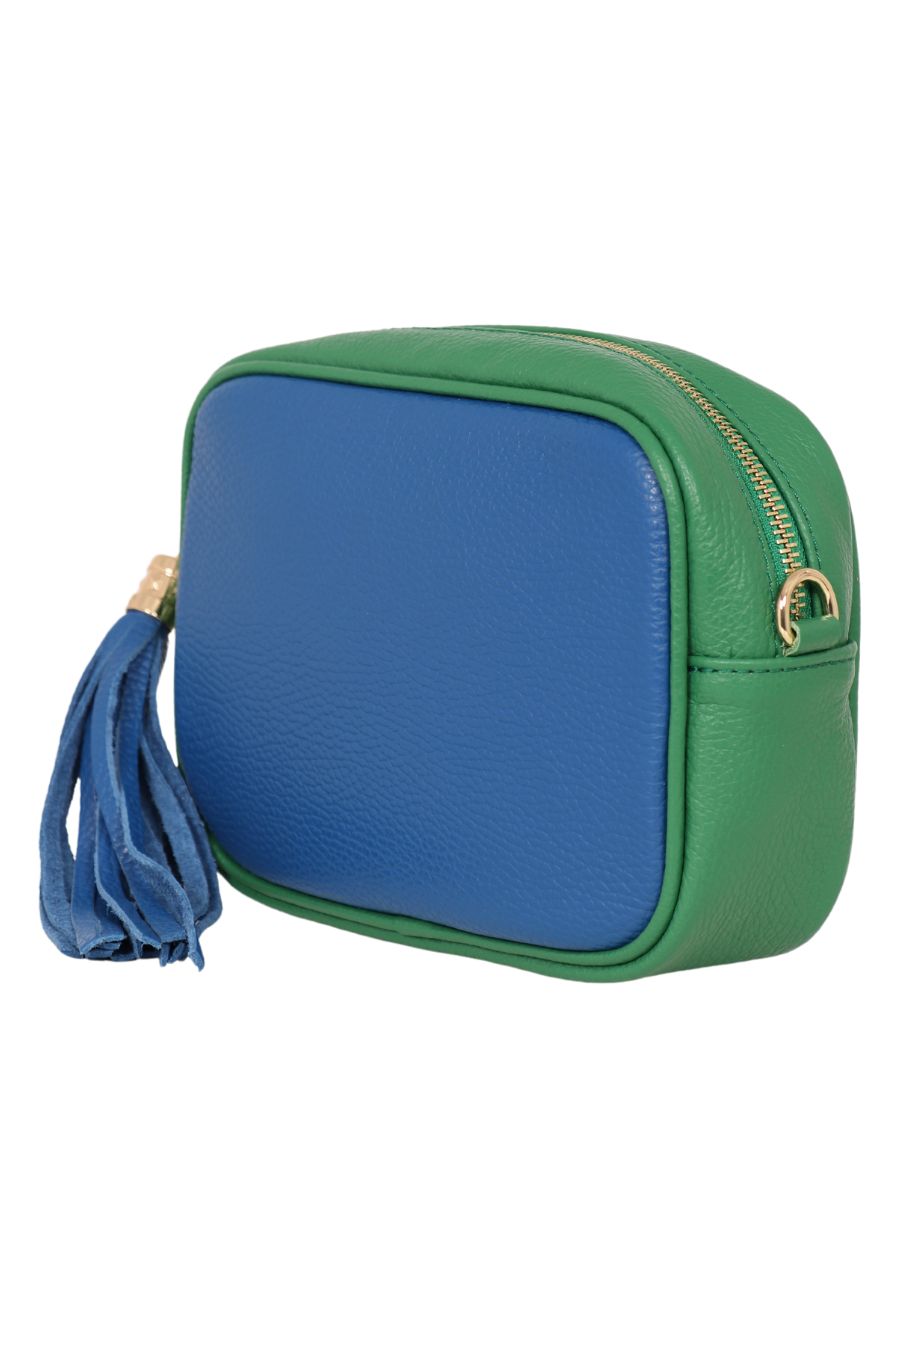 Royal Blue Bright Green Two Tone Genuine Italian Leather Camera Bag